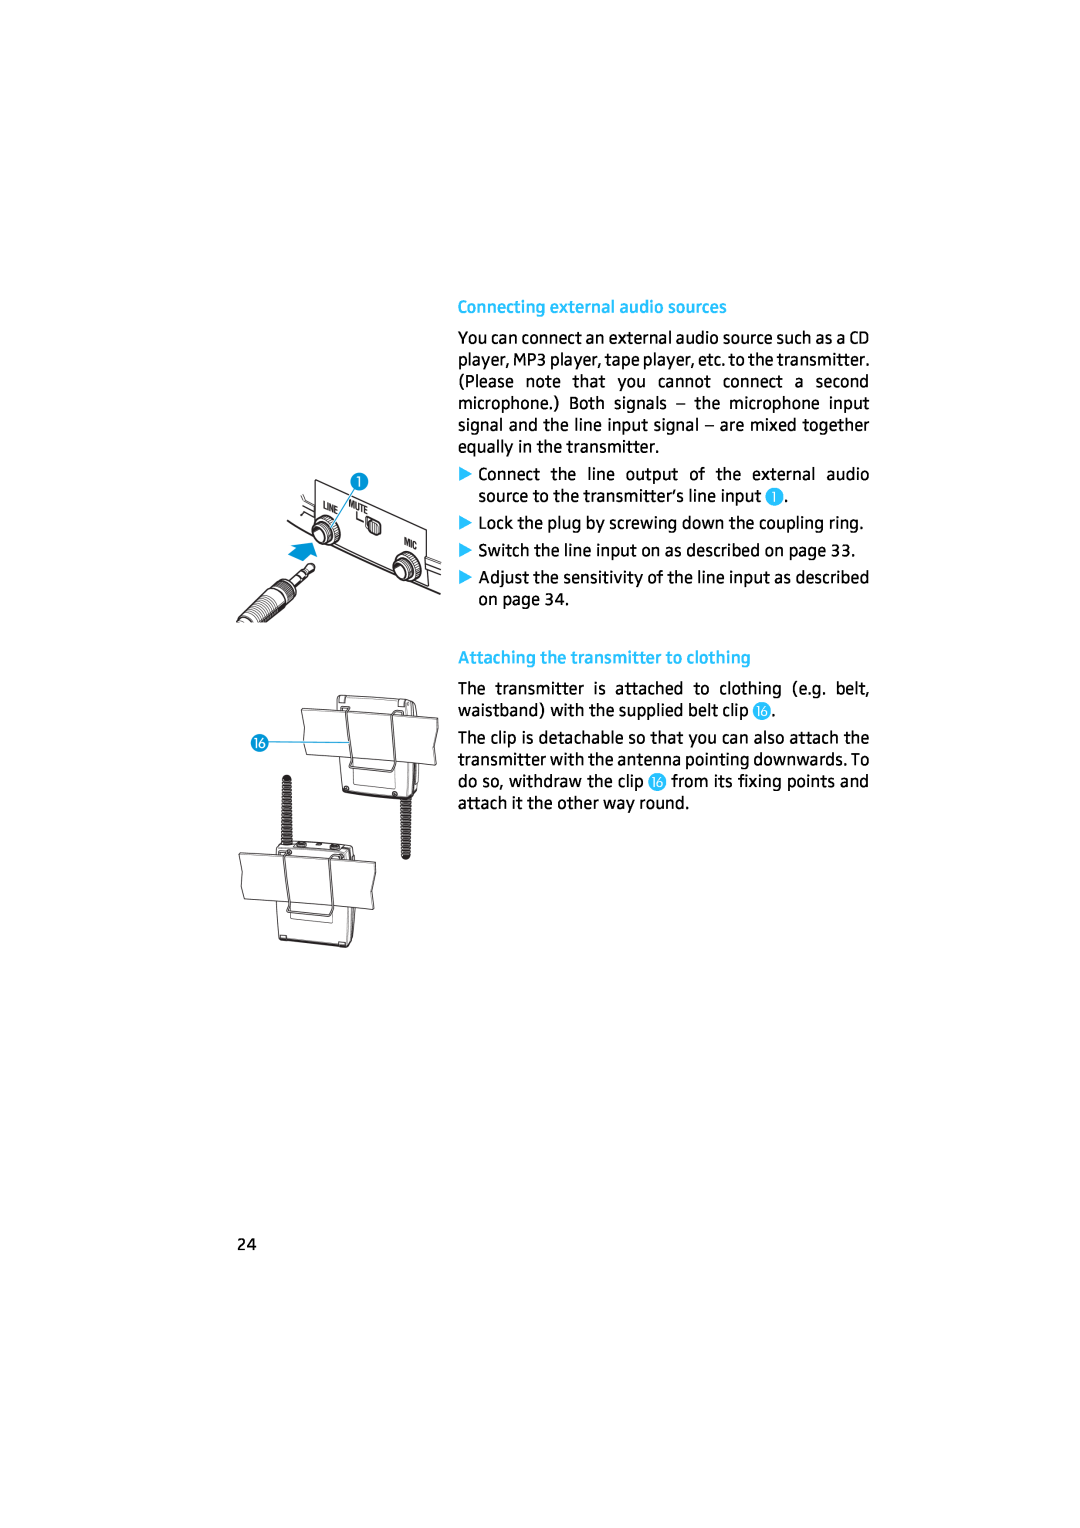 Sennheiser 2020 manual Lock the plug by screwing down the coupling ring 